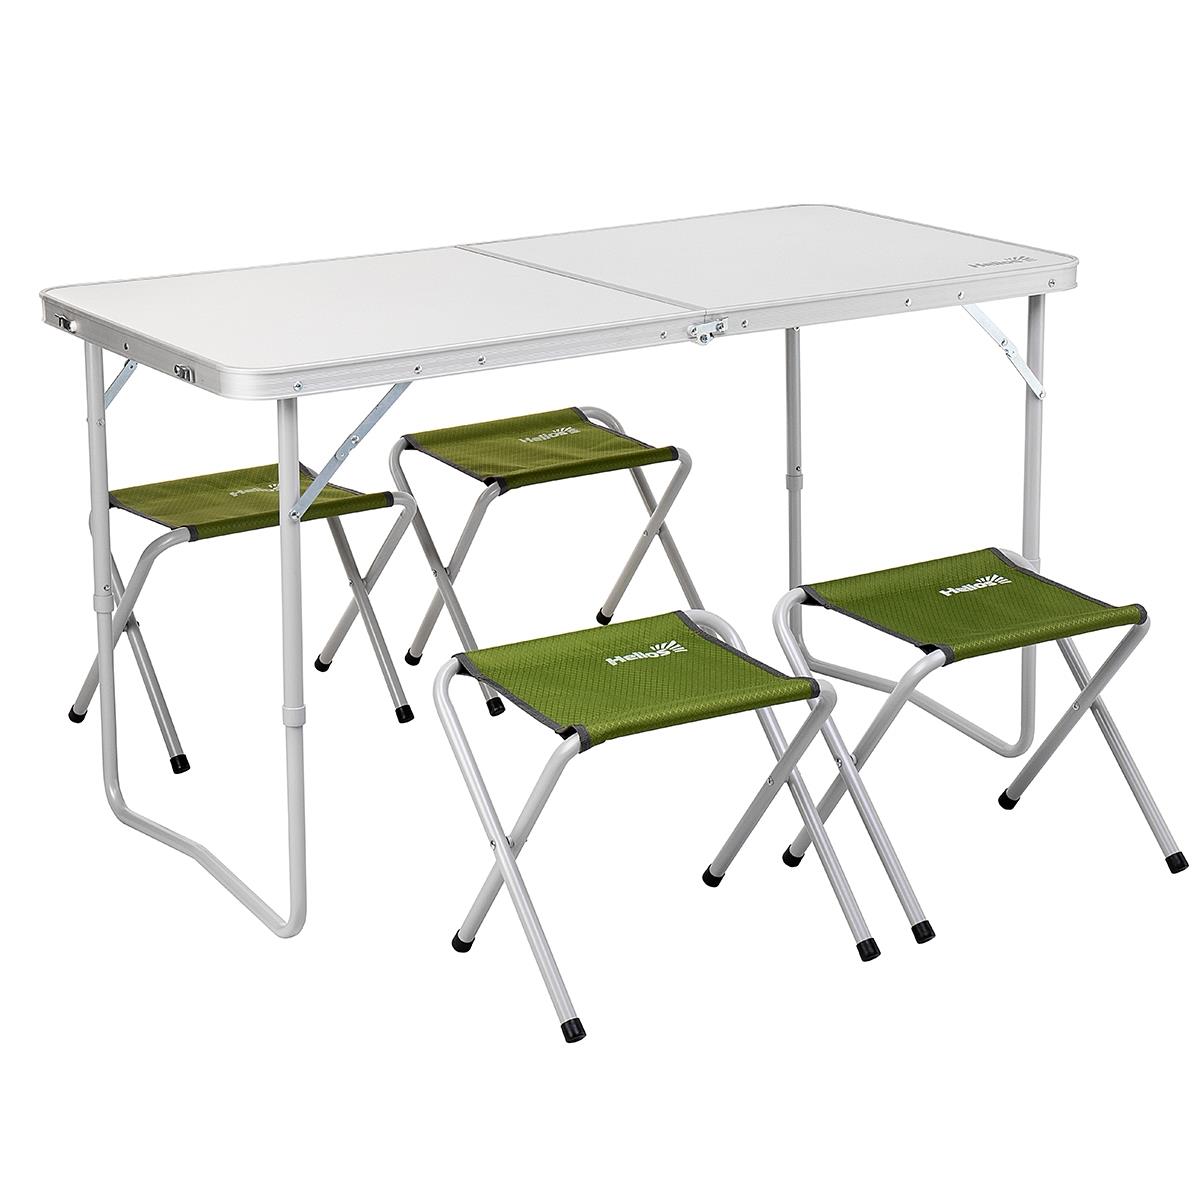 Набор мебели стол + 4 табурета в чехле Green (Т-FS-21407+21124-SG-1) стальной каркас, пр-во Тонар Helios